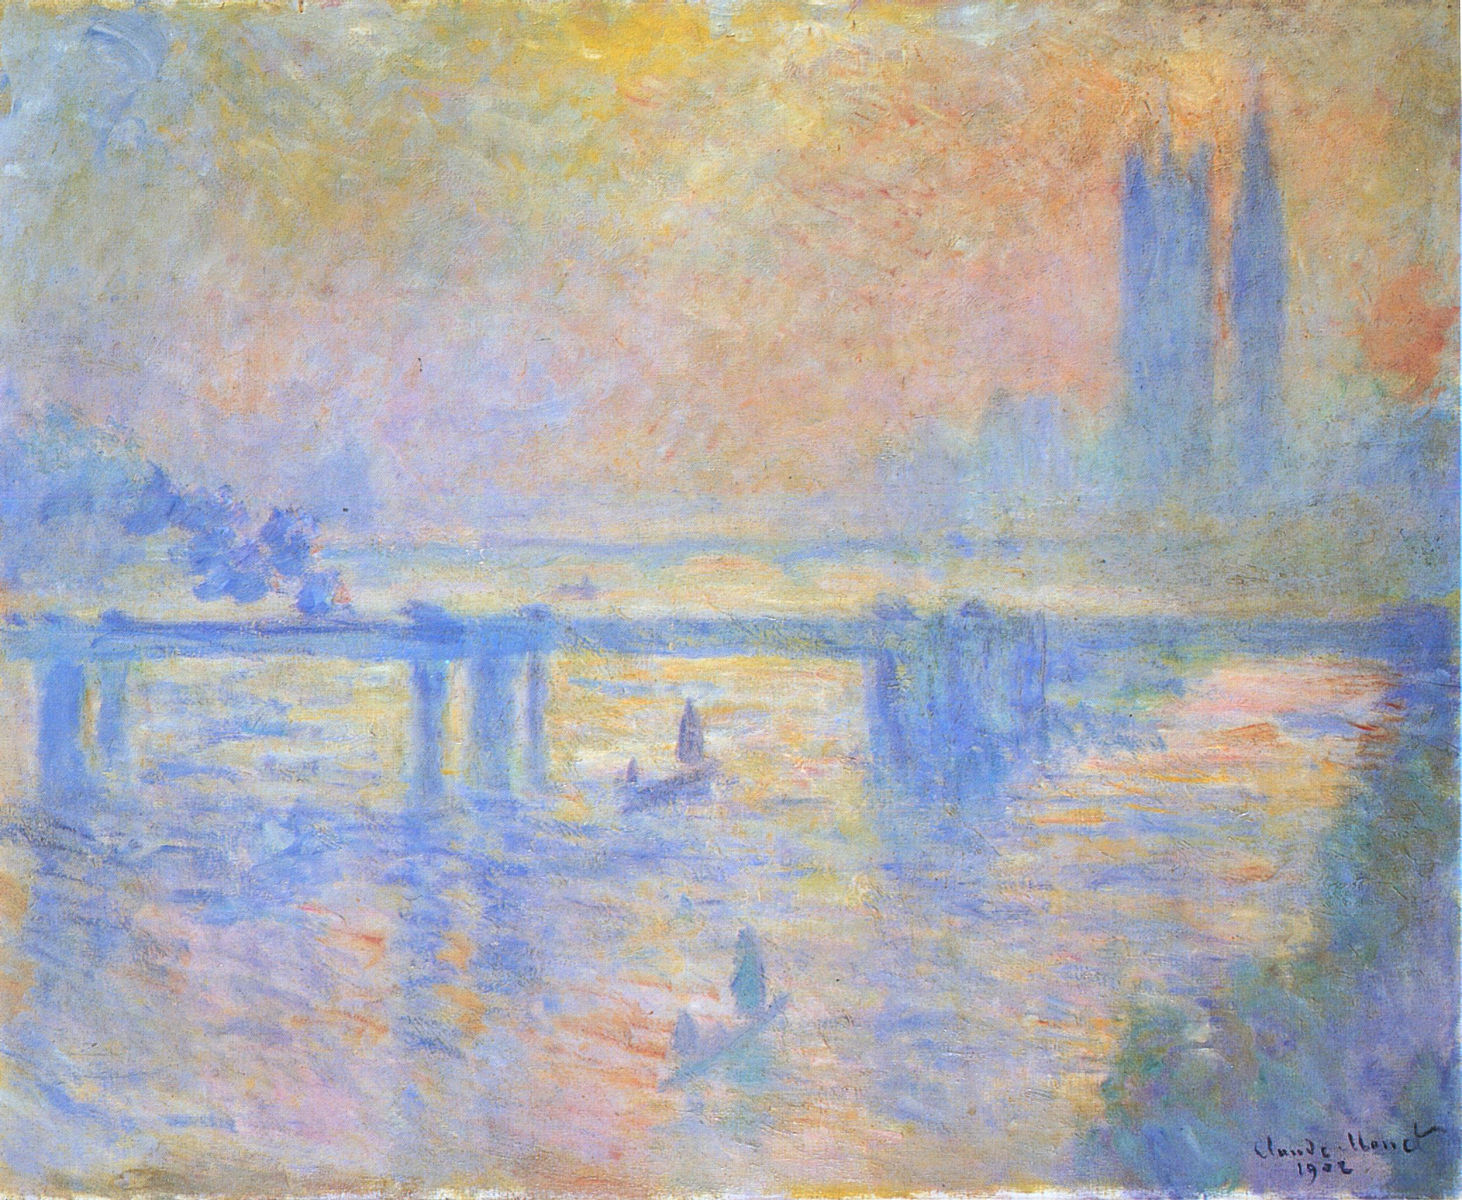 Claude+Monet-1840-1926 (184).jpg